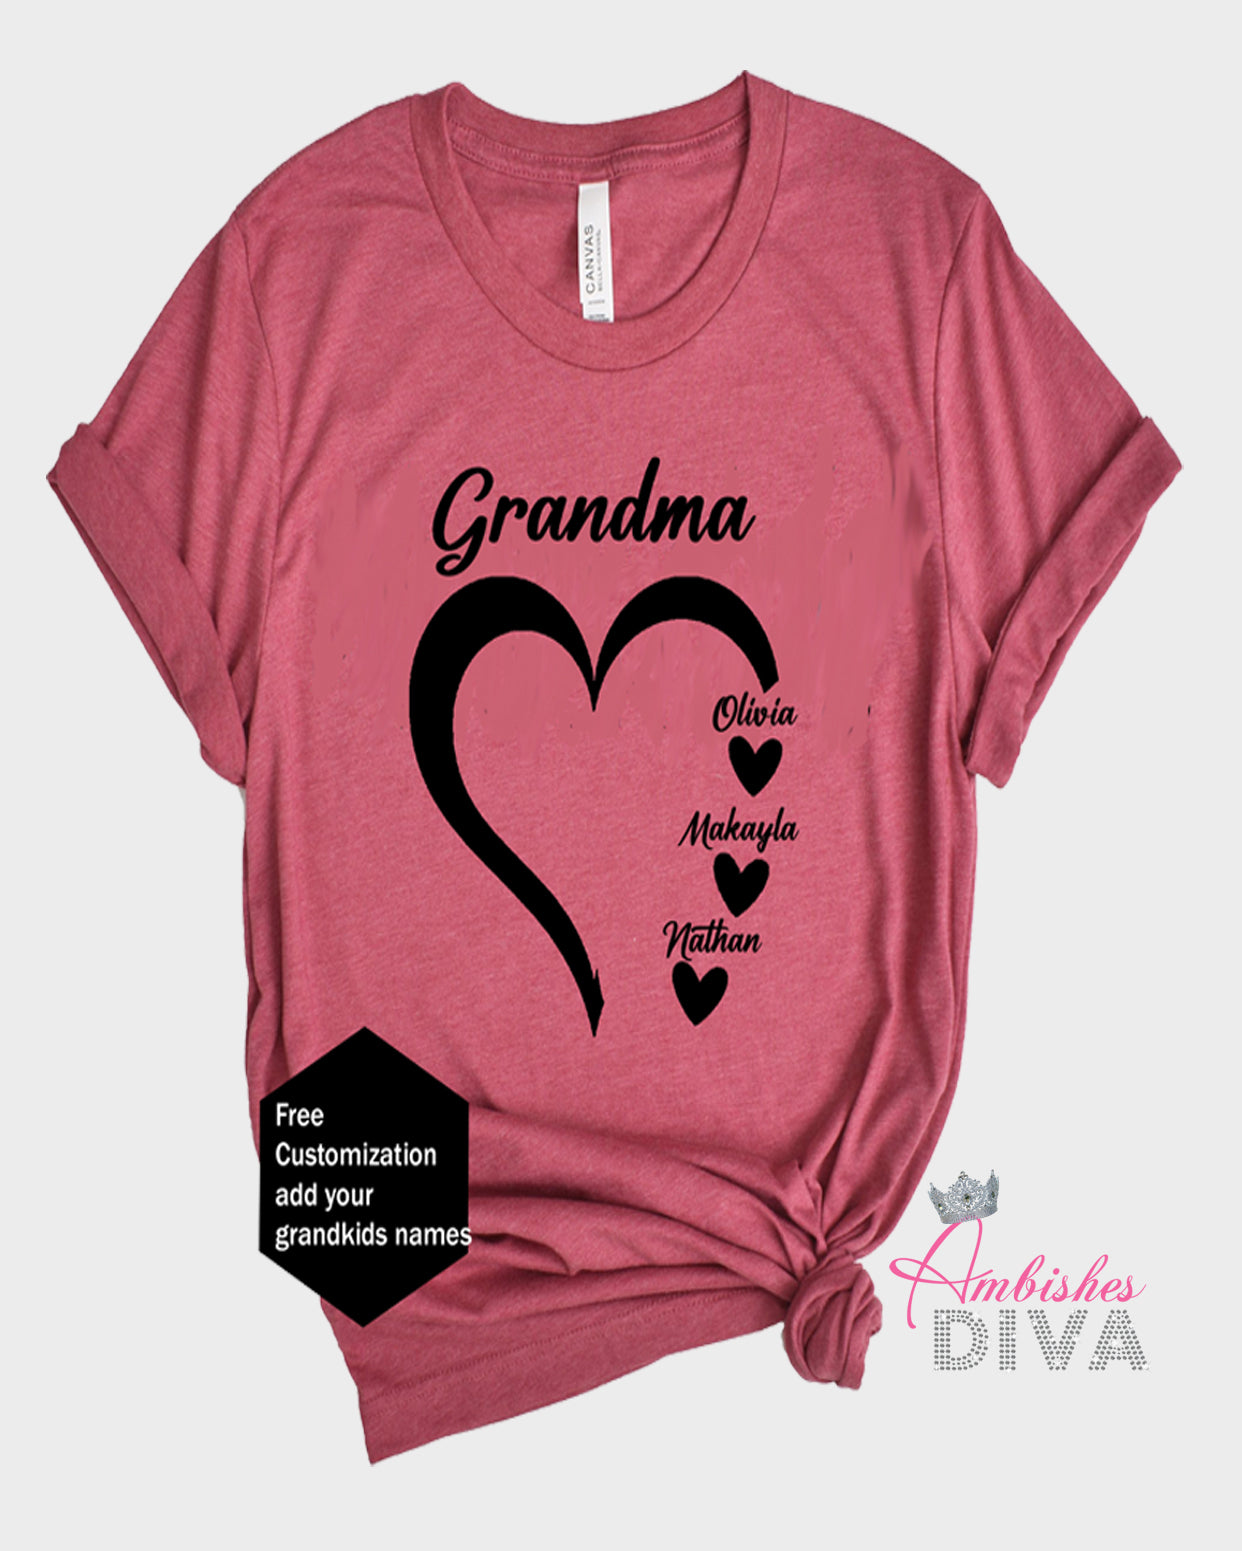 grandma shirts with grandkids names 